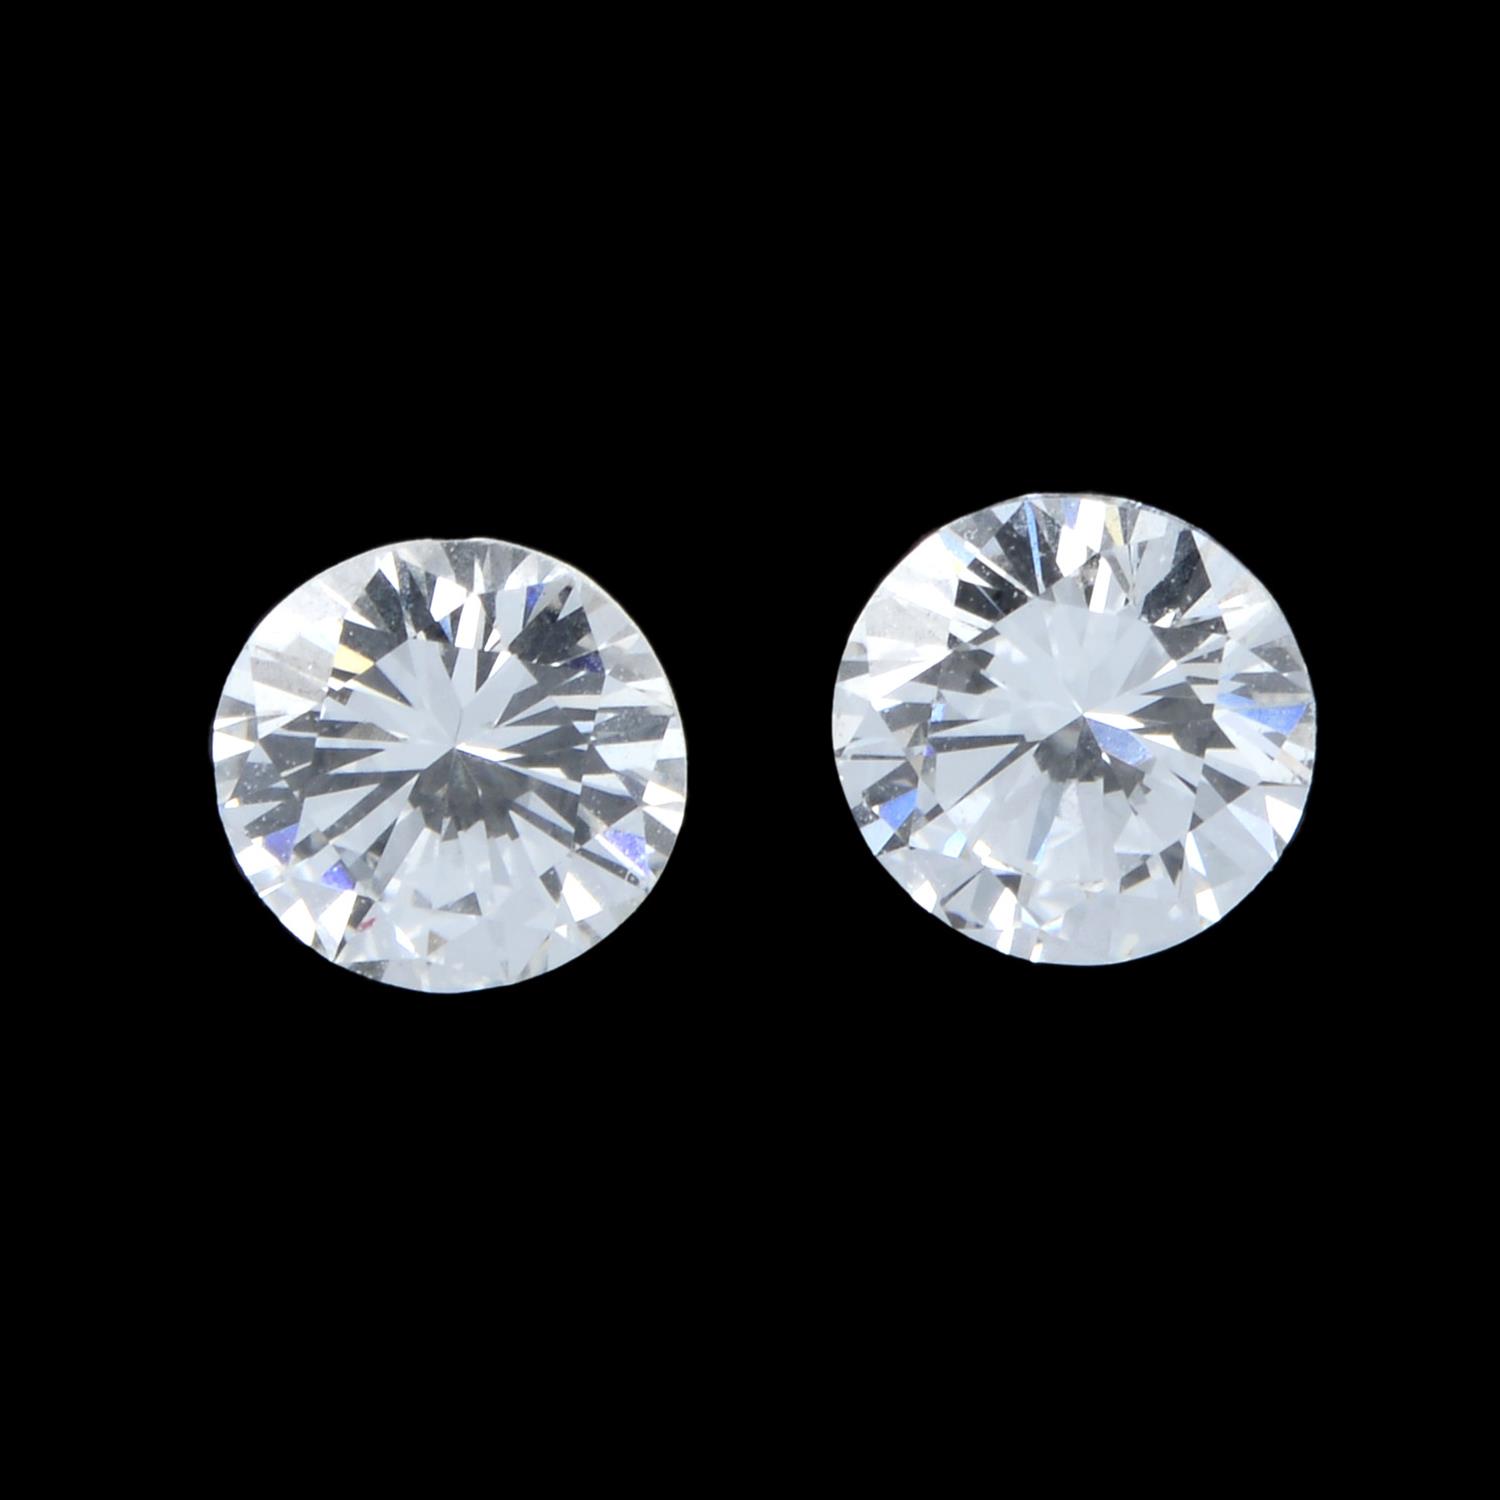 Pair of brilliant cut diamonds weighing 0.45ct